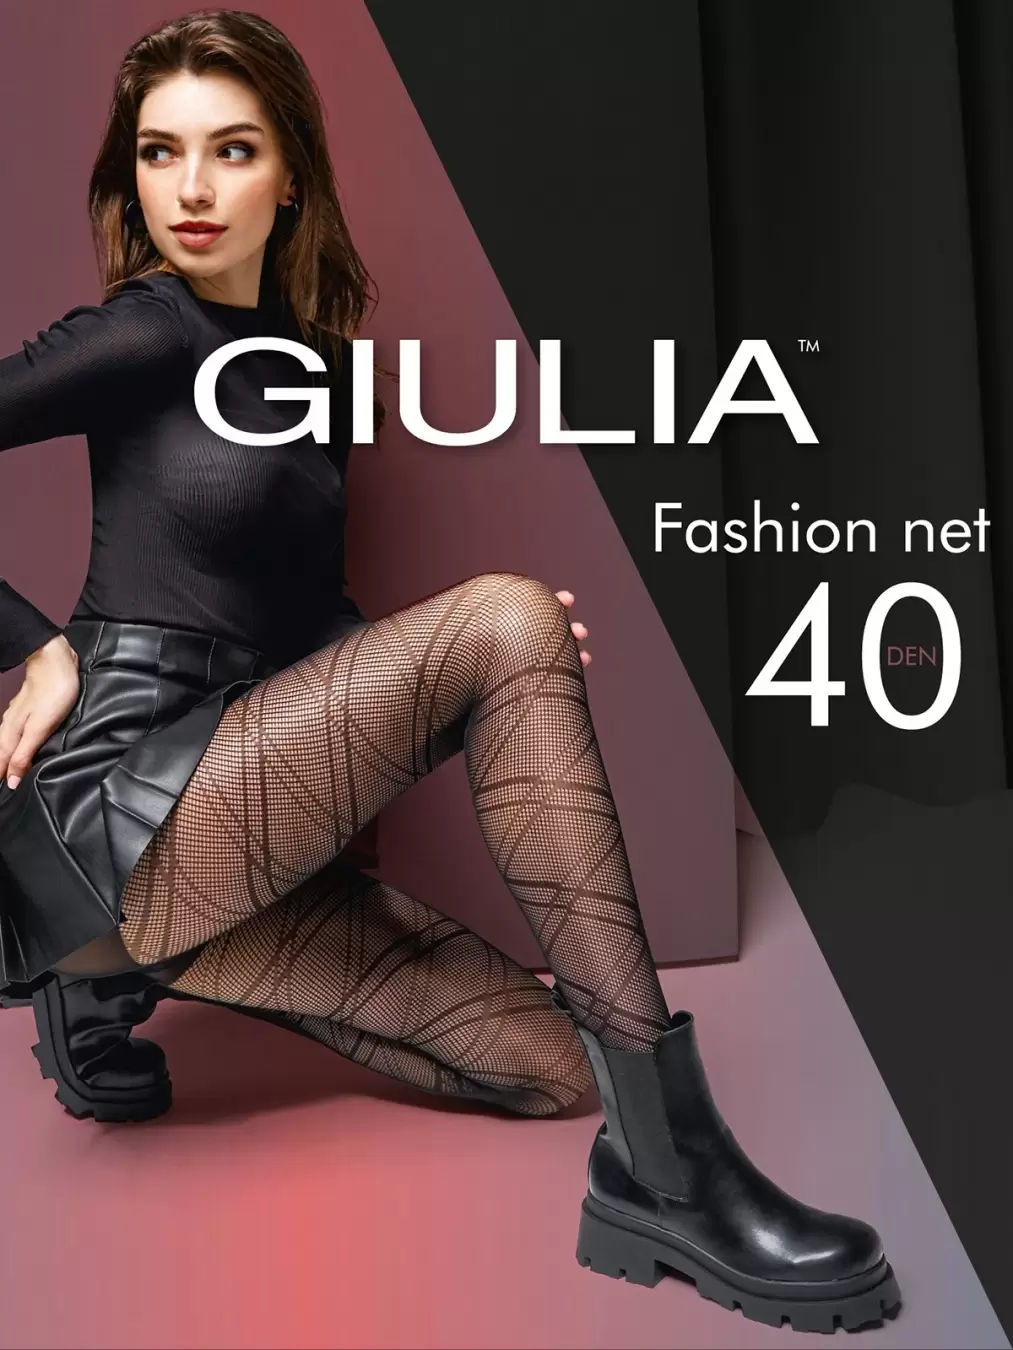 Giulia FASHION NET 04, фантазийные колготки (изображение 1)